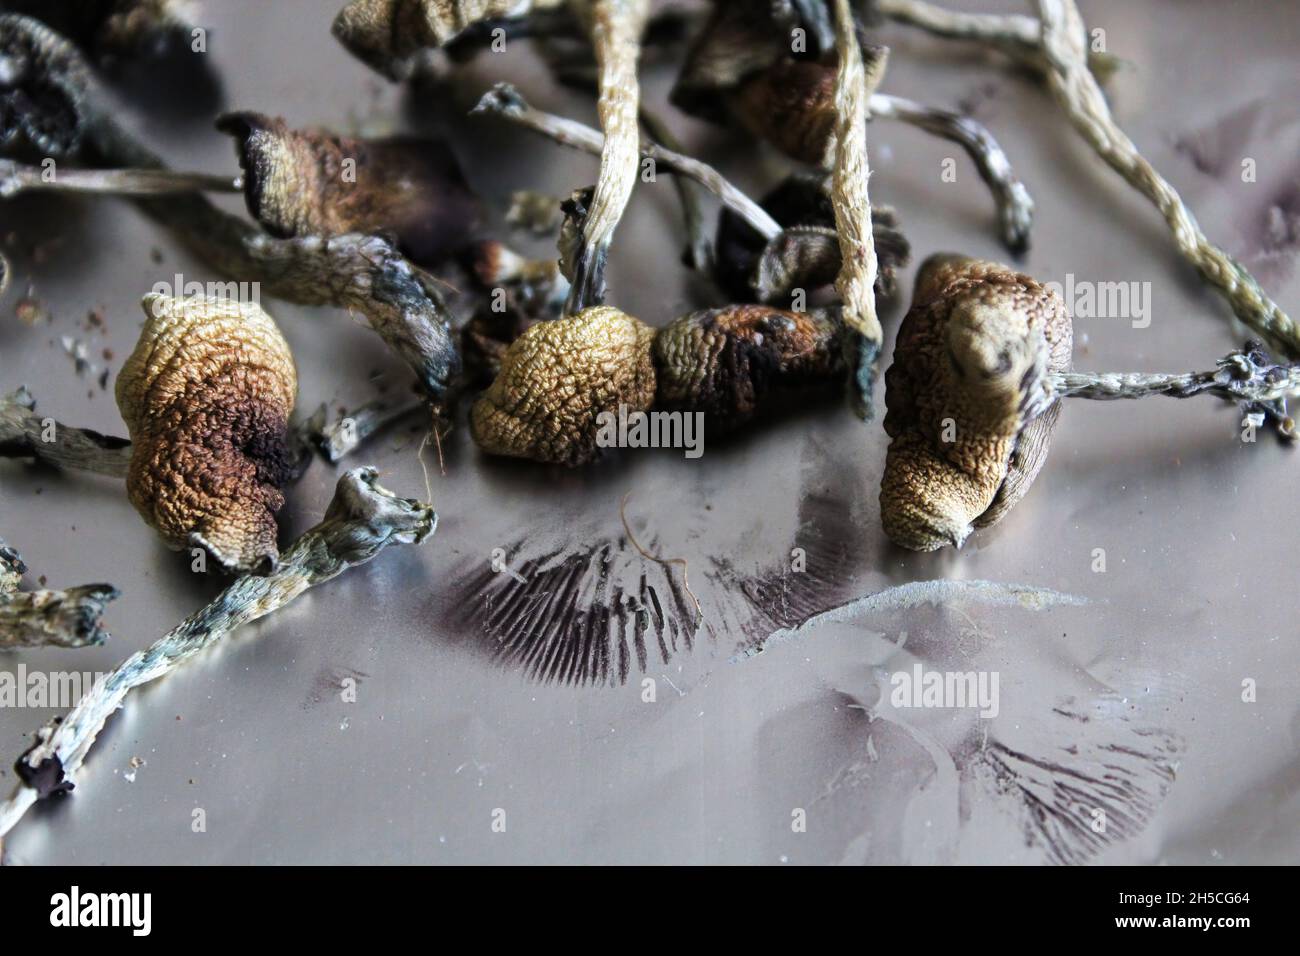 Dried magic with spore prints on tin foil Stock Photo